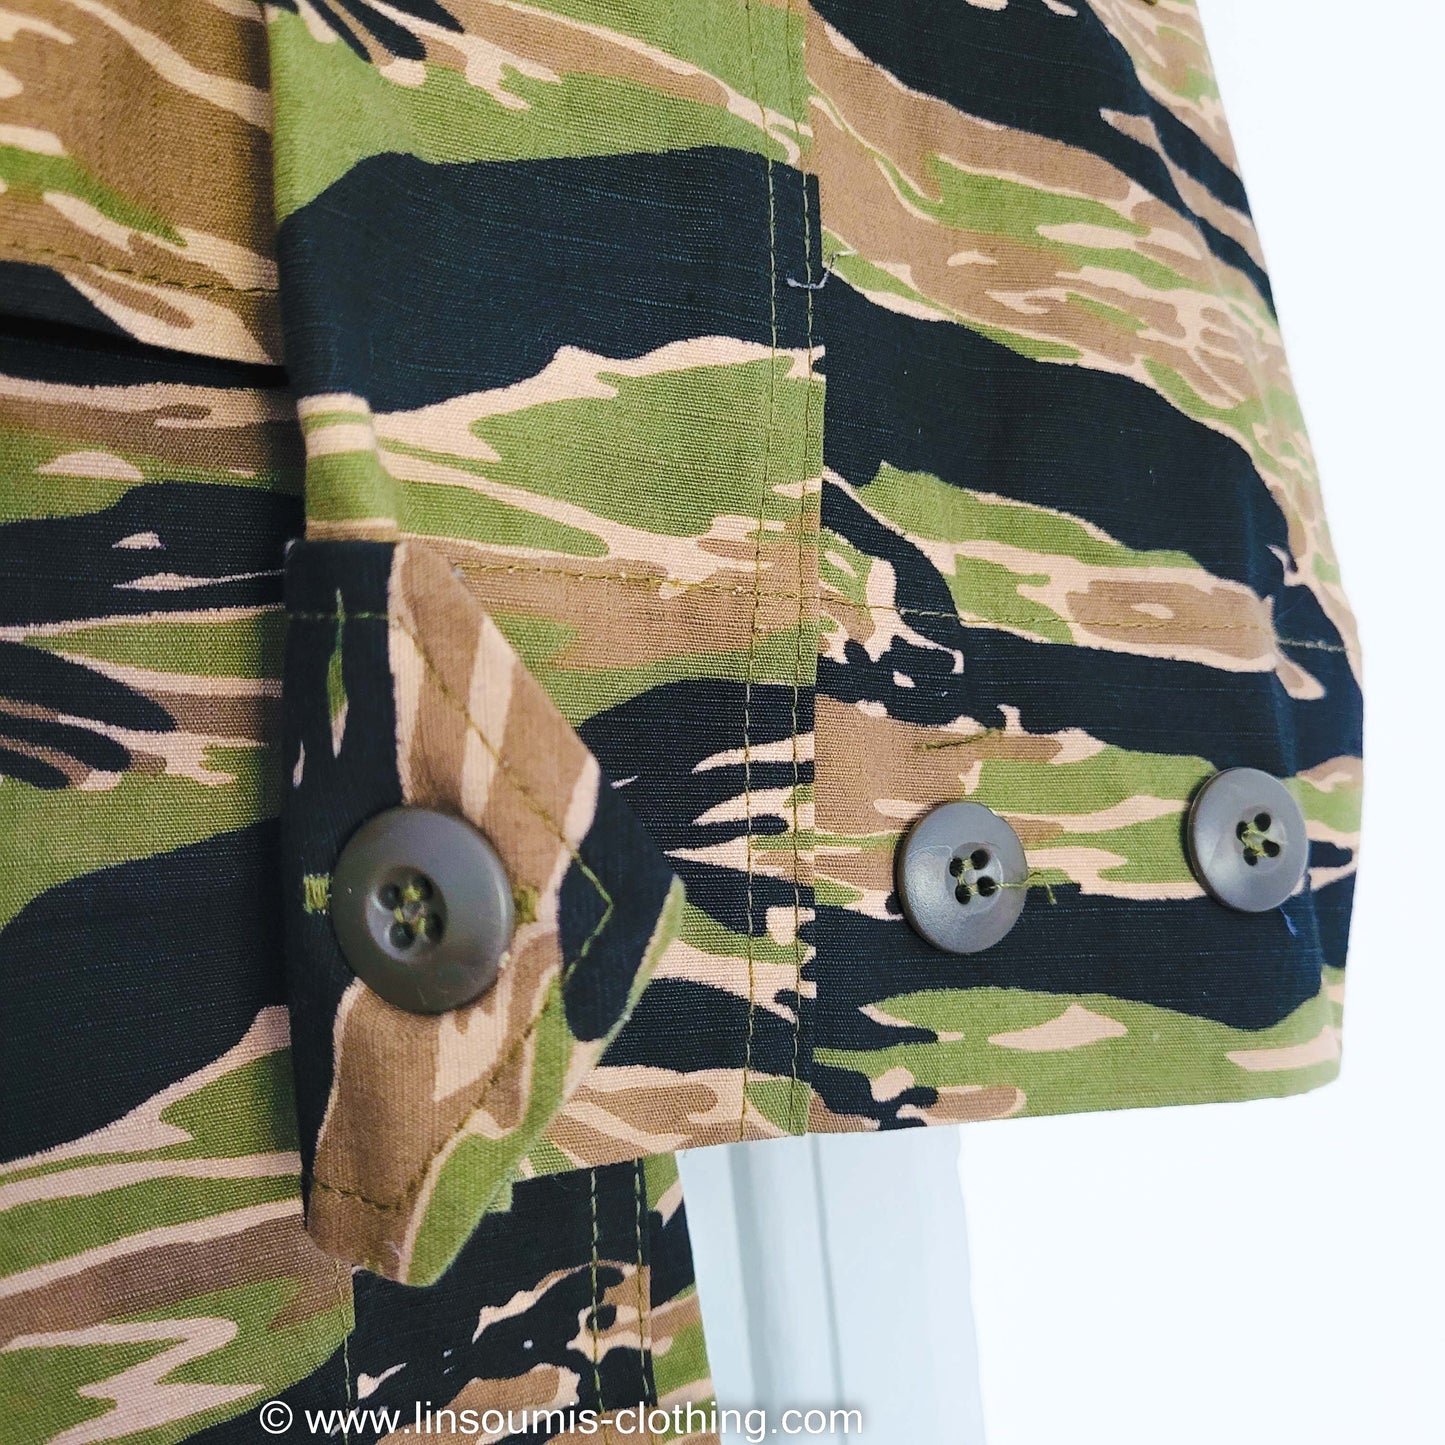 Rare Tiger Stripe combo utility shirt and pant / rare pantalon et veste camo tiger stripe Sud Vietnam et commandos us